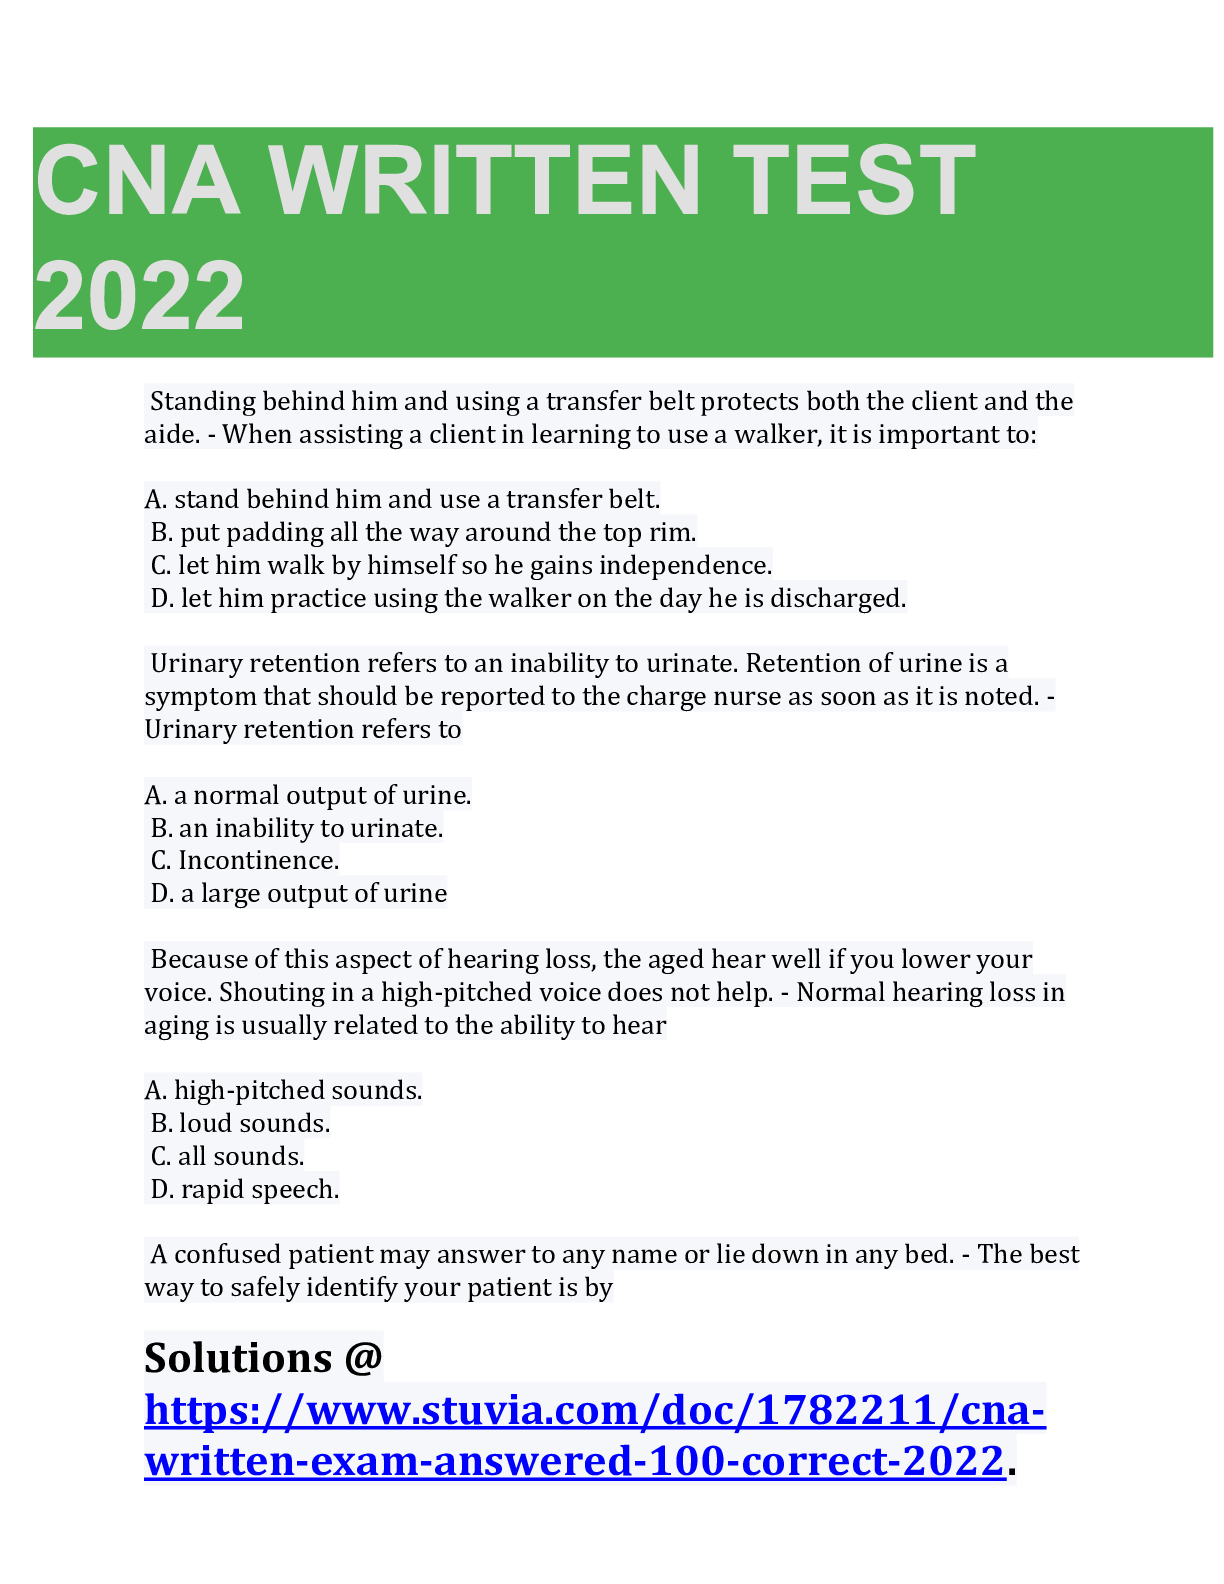 cna written test practice test questions